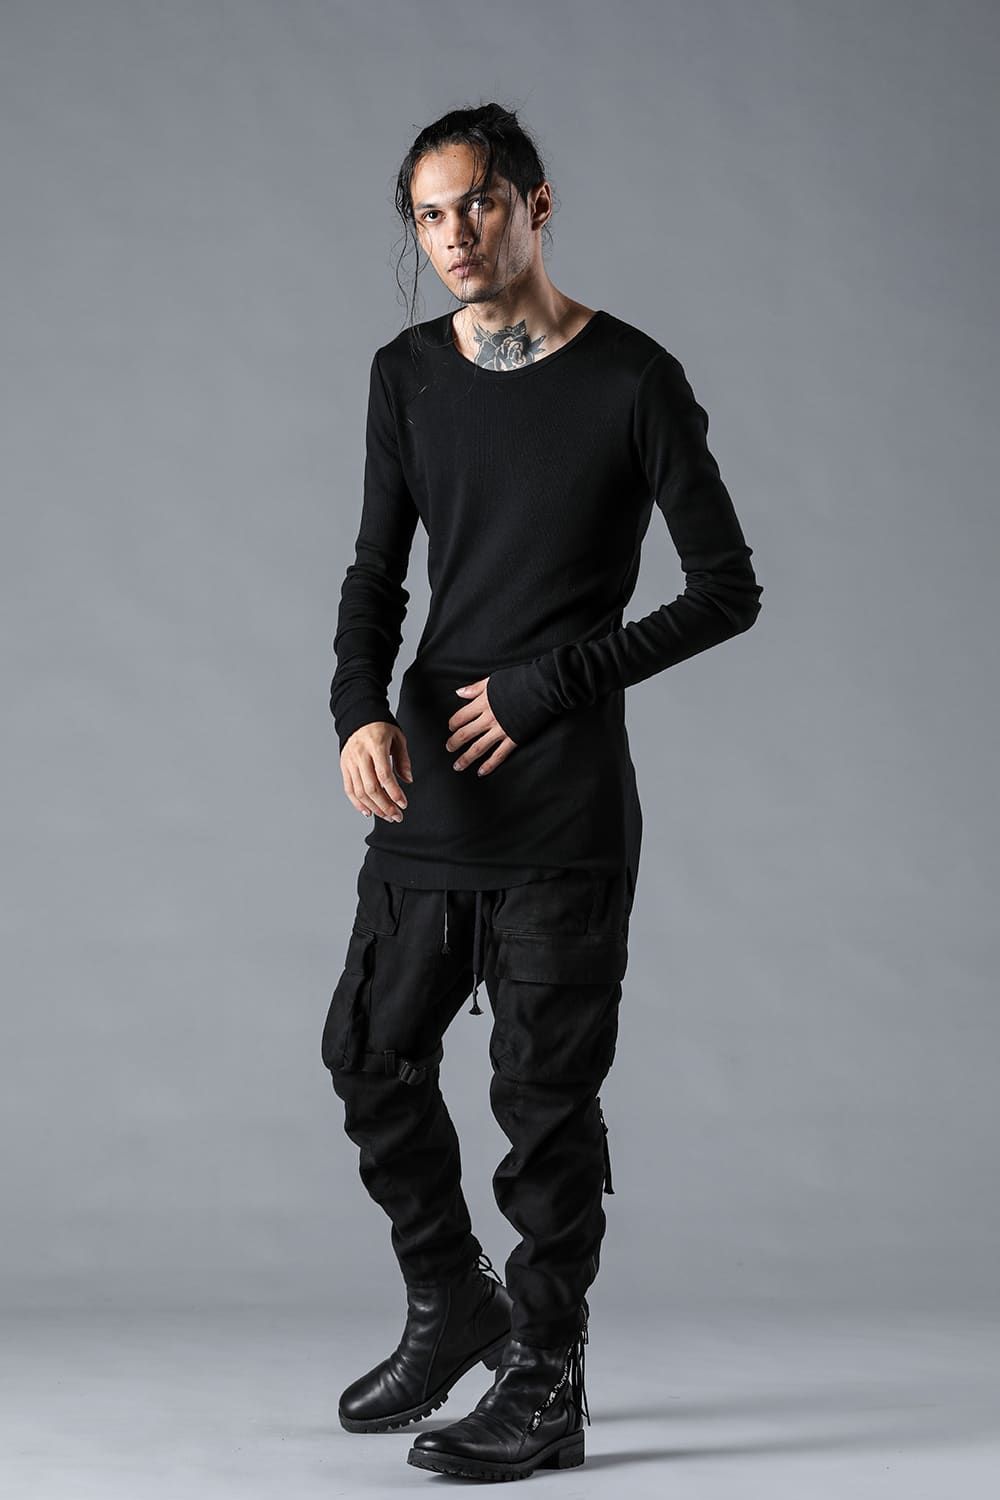 Modal & Cotton Rib Teleco Long Sleeve T Shirt "Black"モダール×コットンリブテレコロングスリーブTシャツ"ブラック"